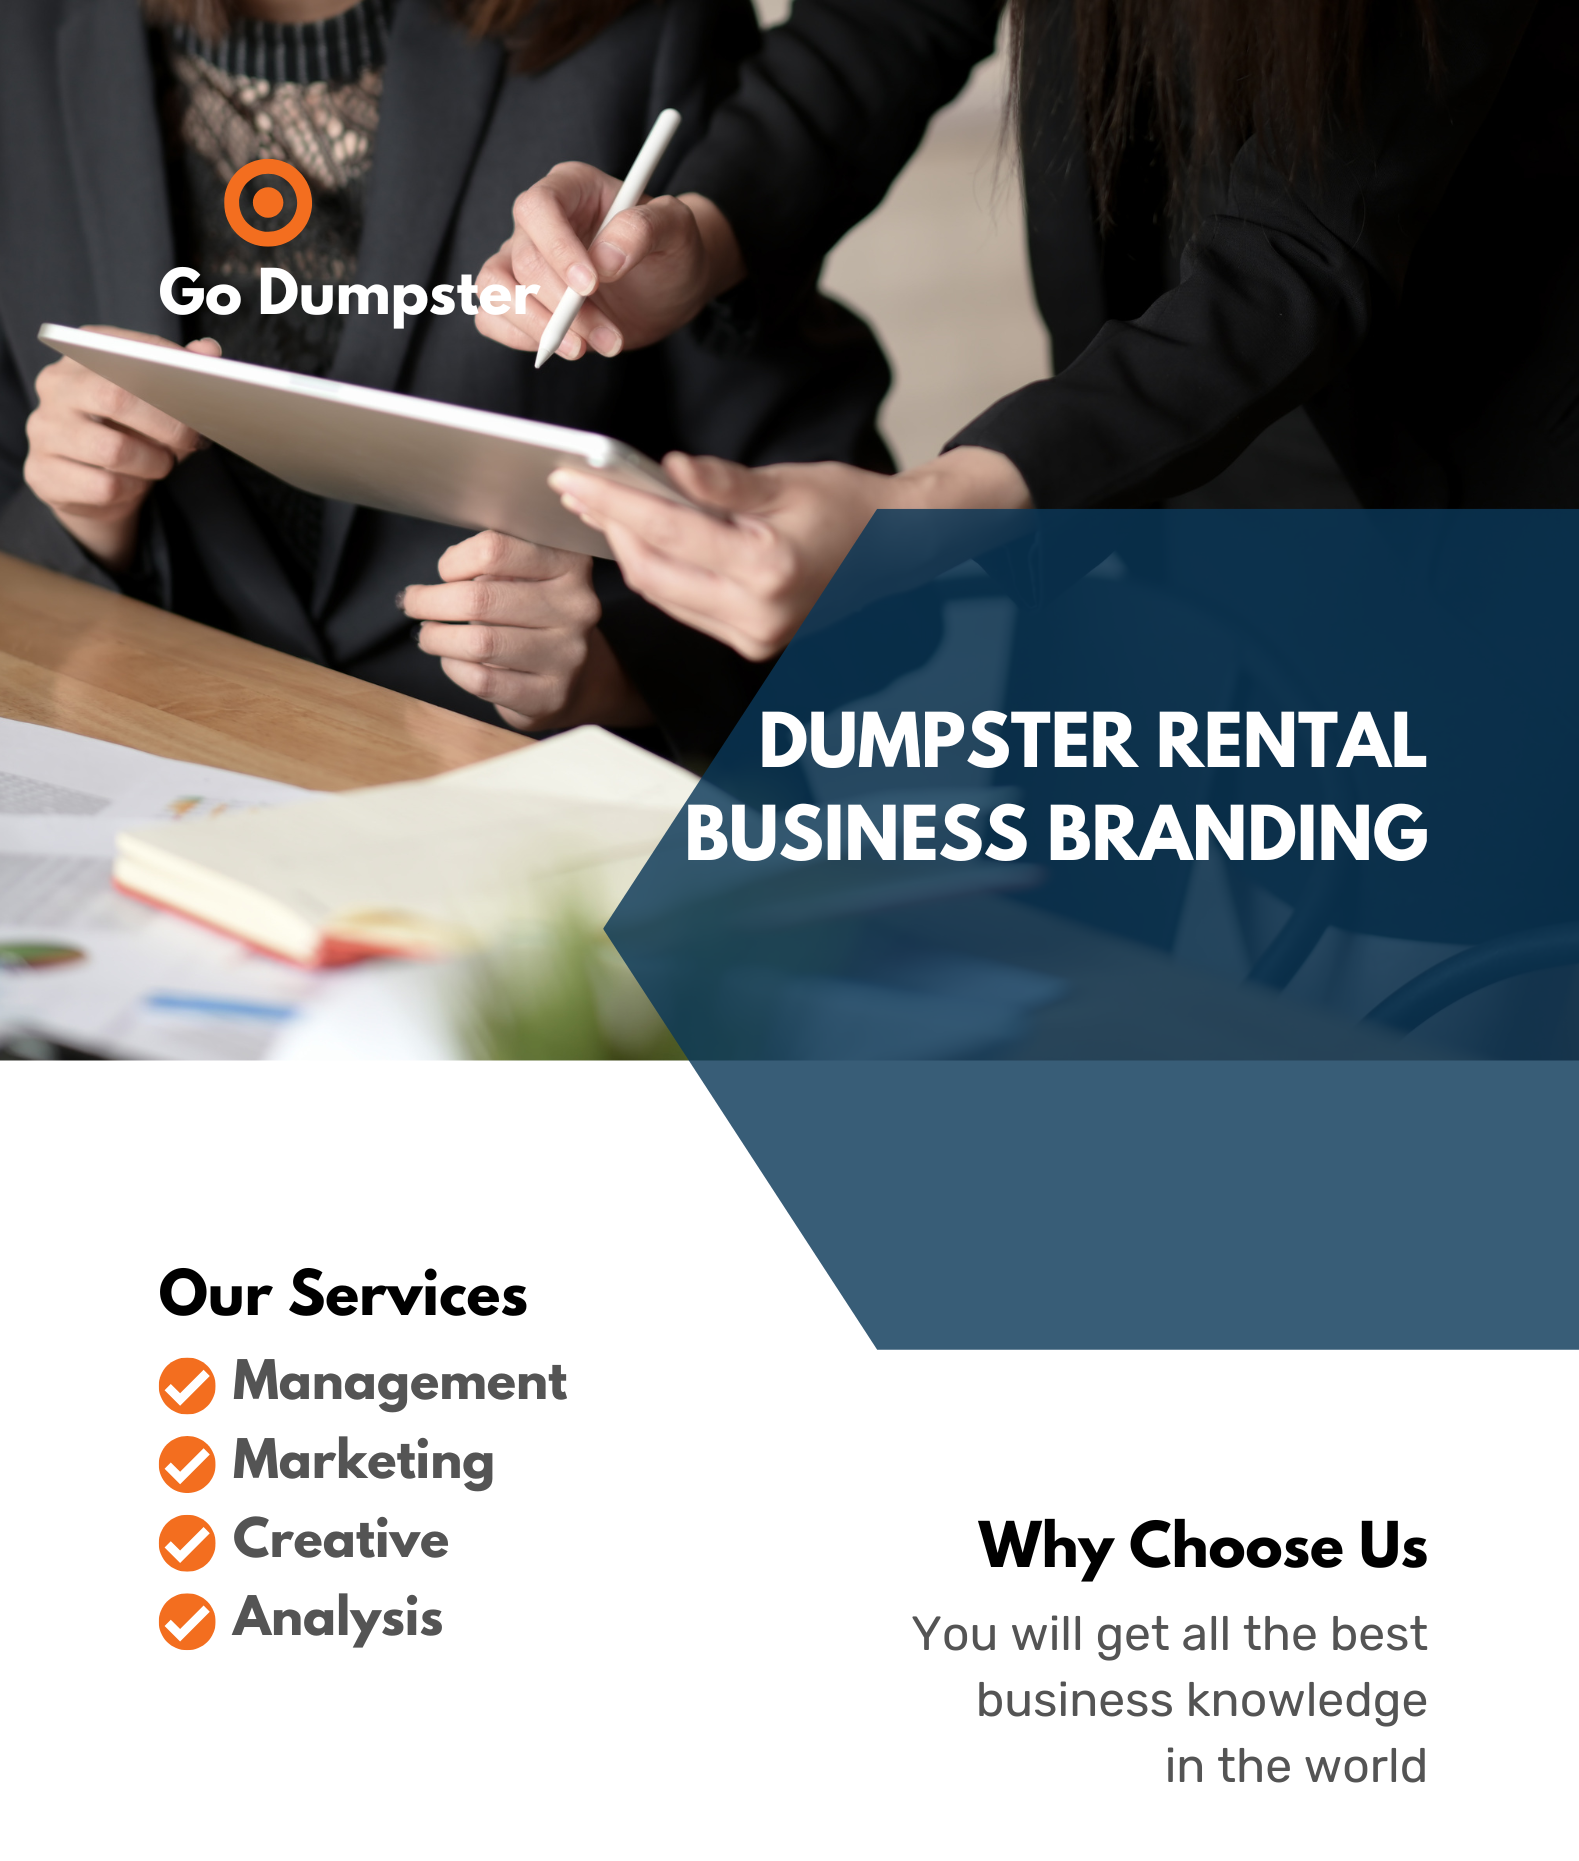 Dumpster Rental Business Branding